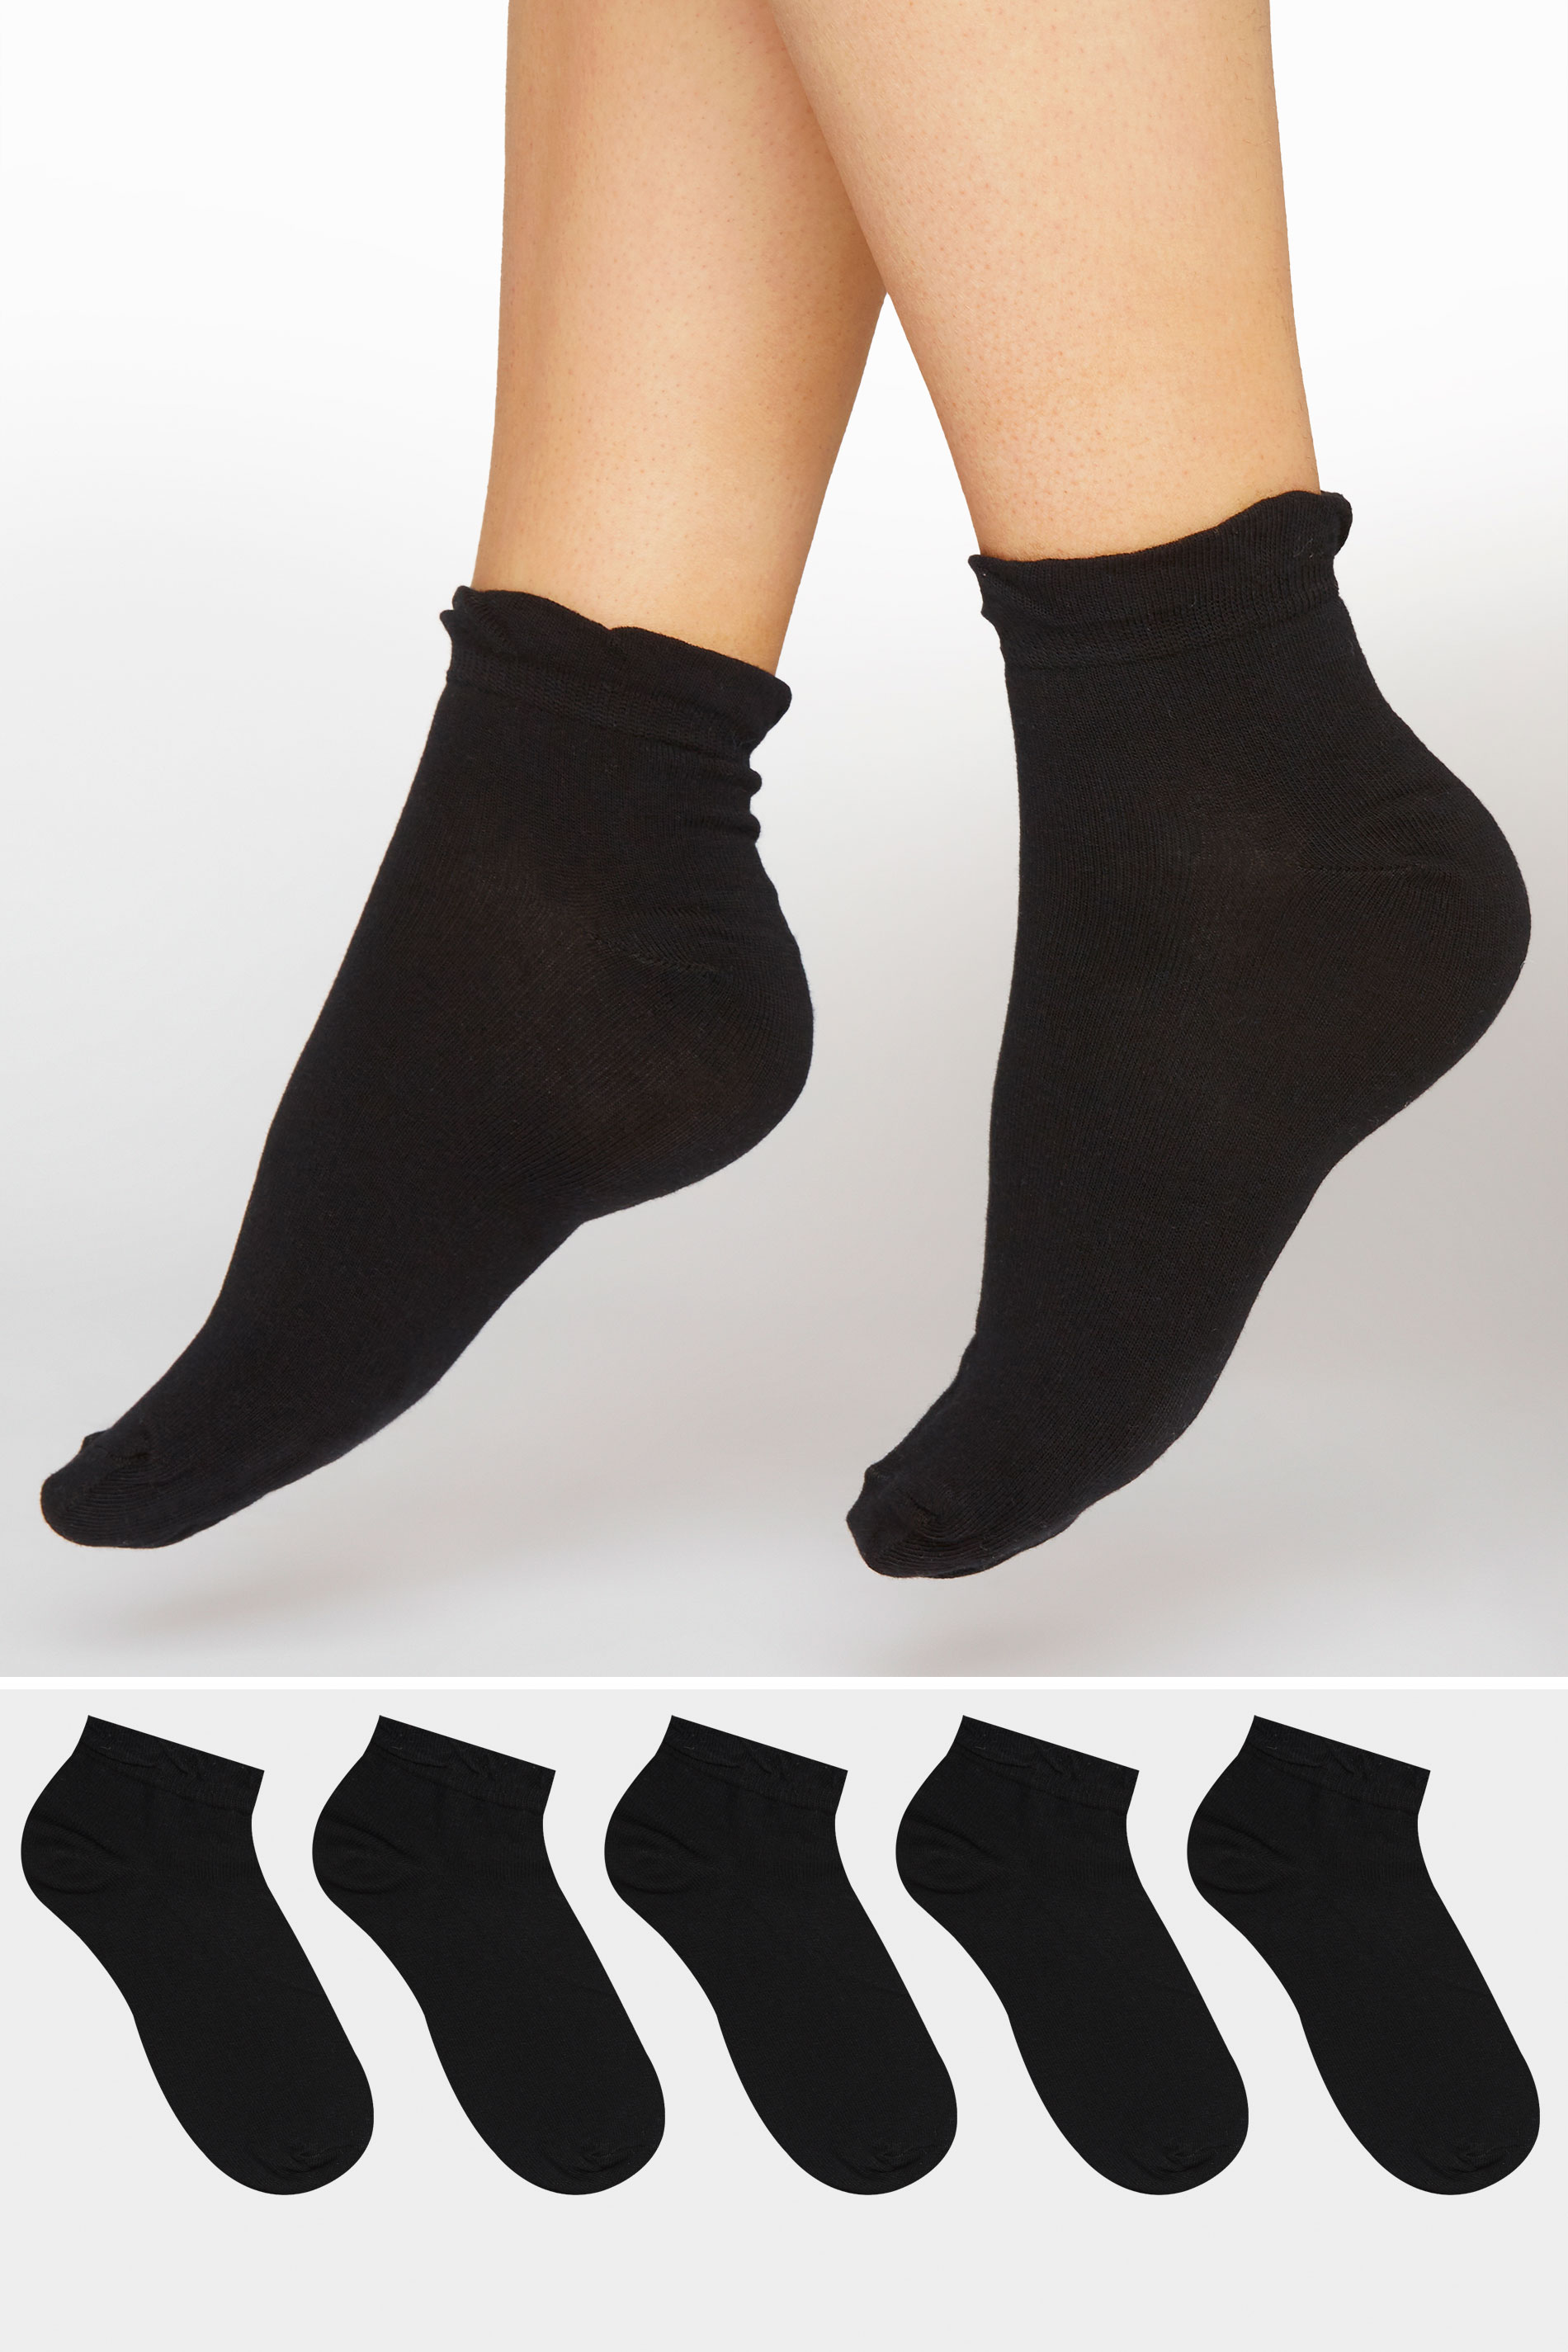 5 PACK Black Trainer Liner Socks | Yours Clothing 1